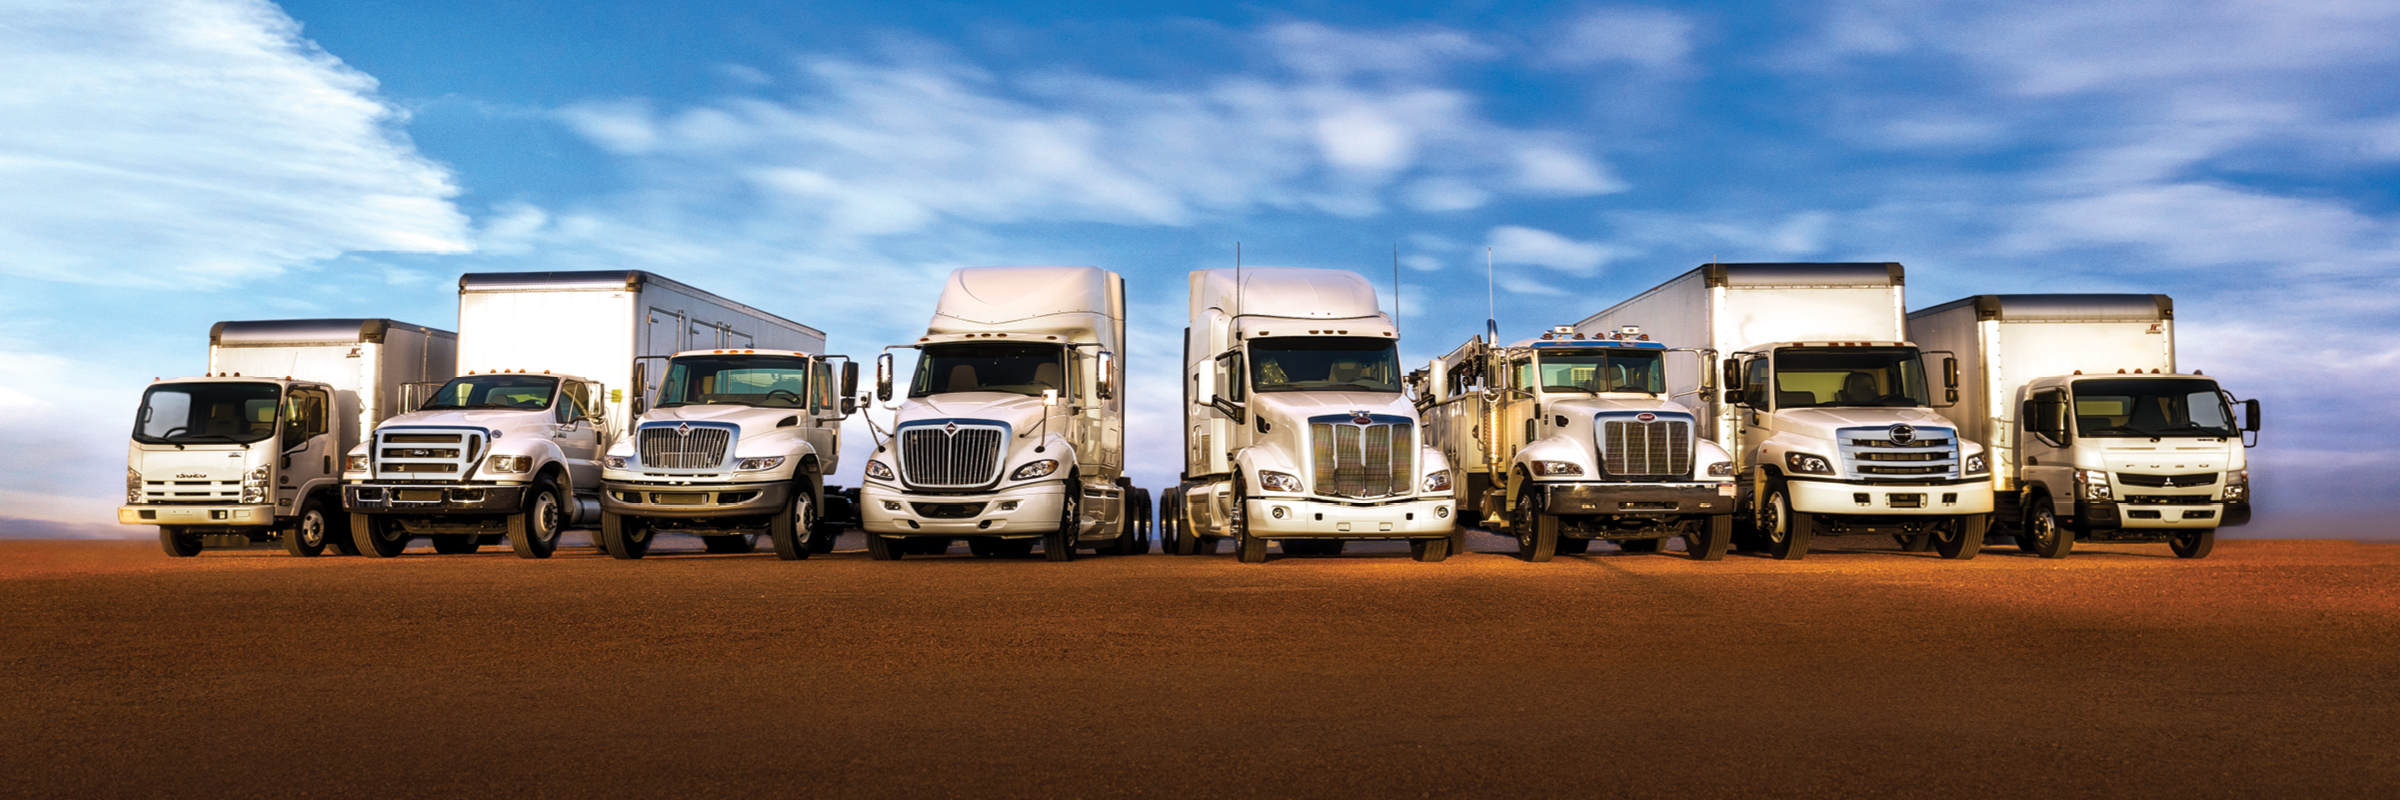 Line up of used trucks | Isuzu, International, Peterbilt, Hino, Mitsubishi Fuso, and Ford trucks